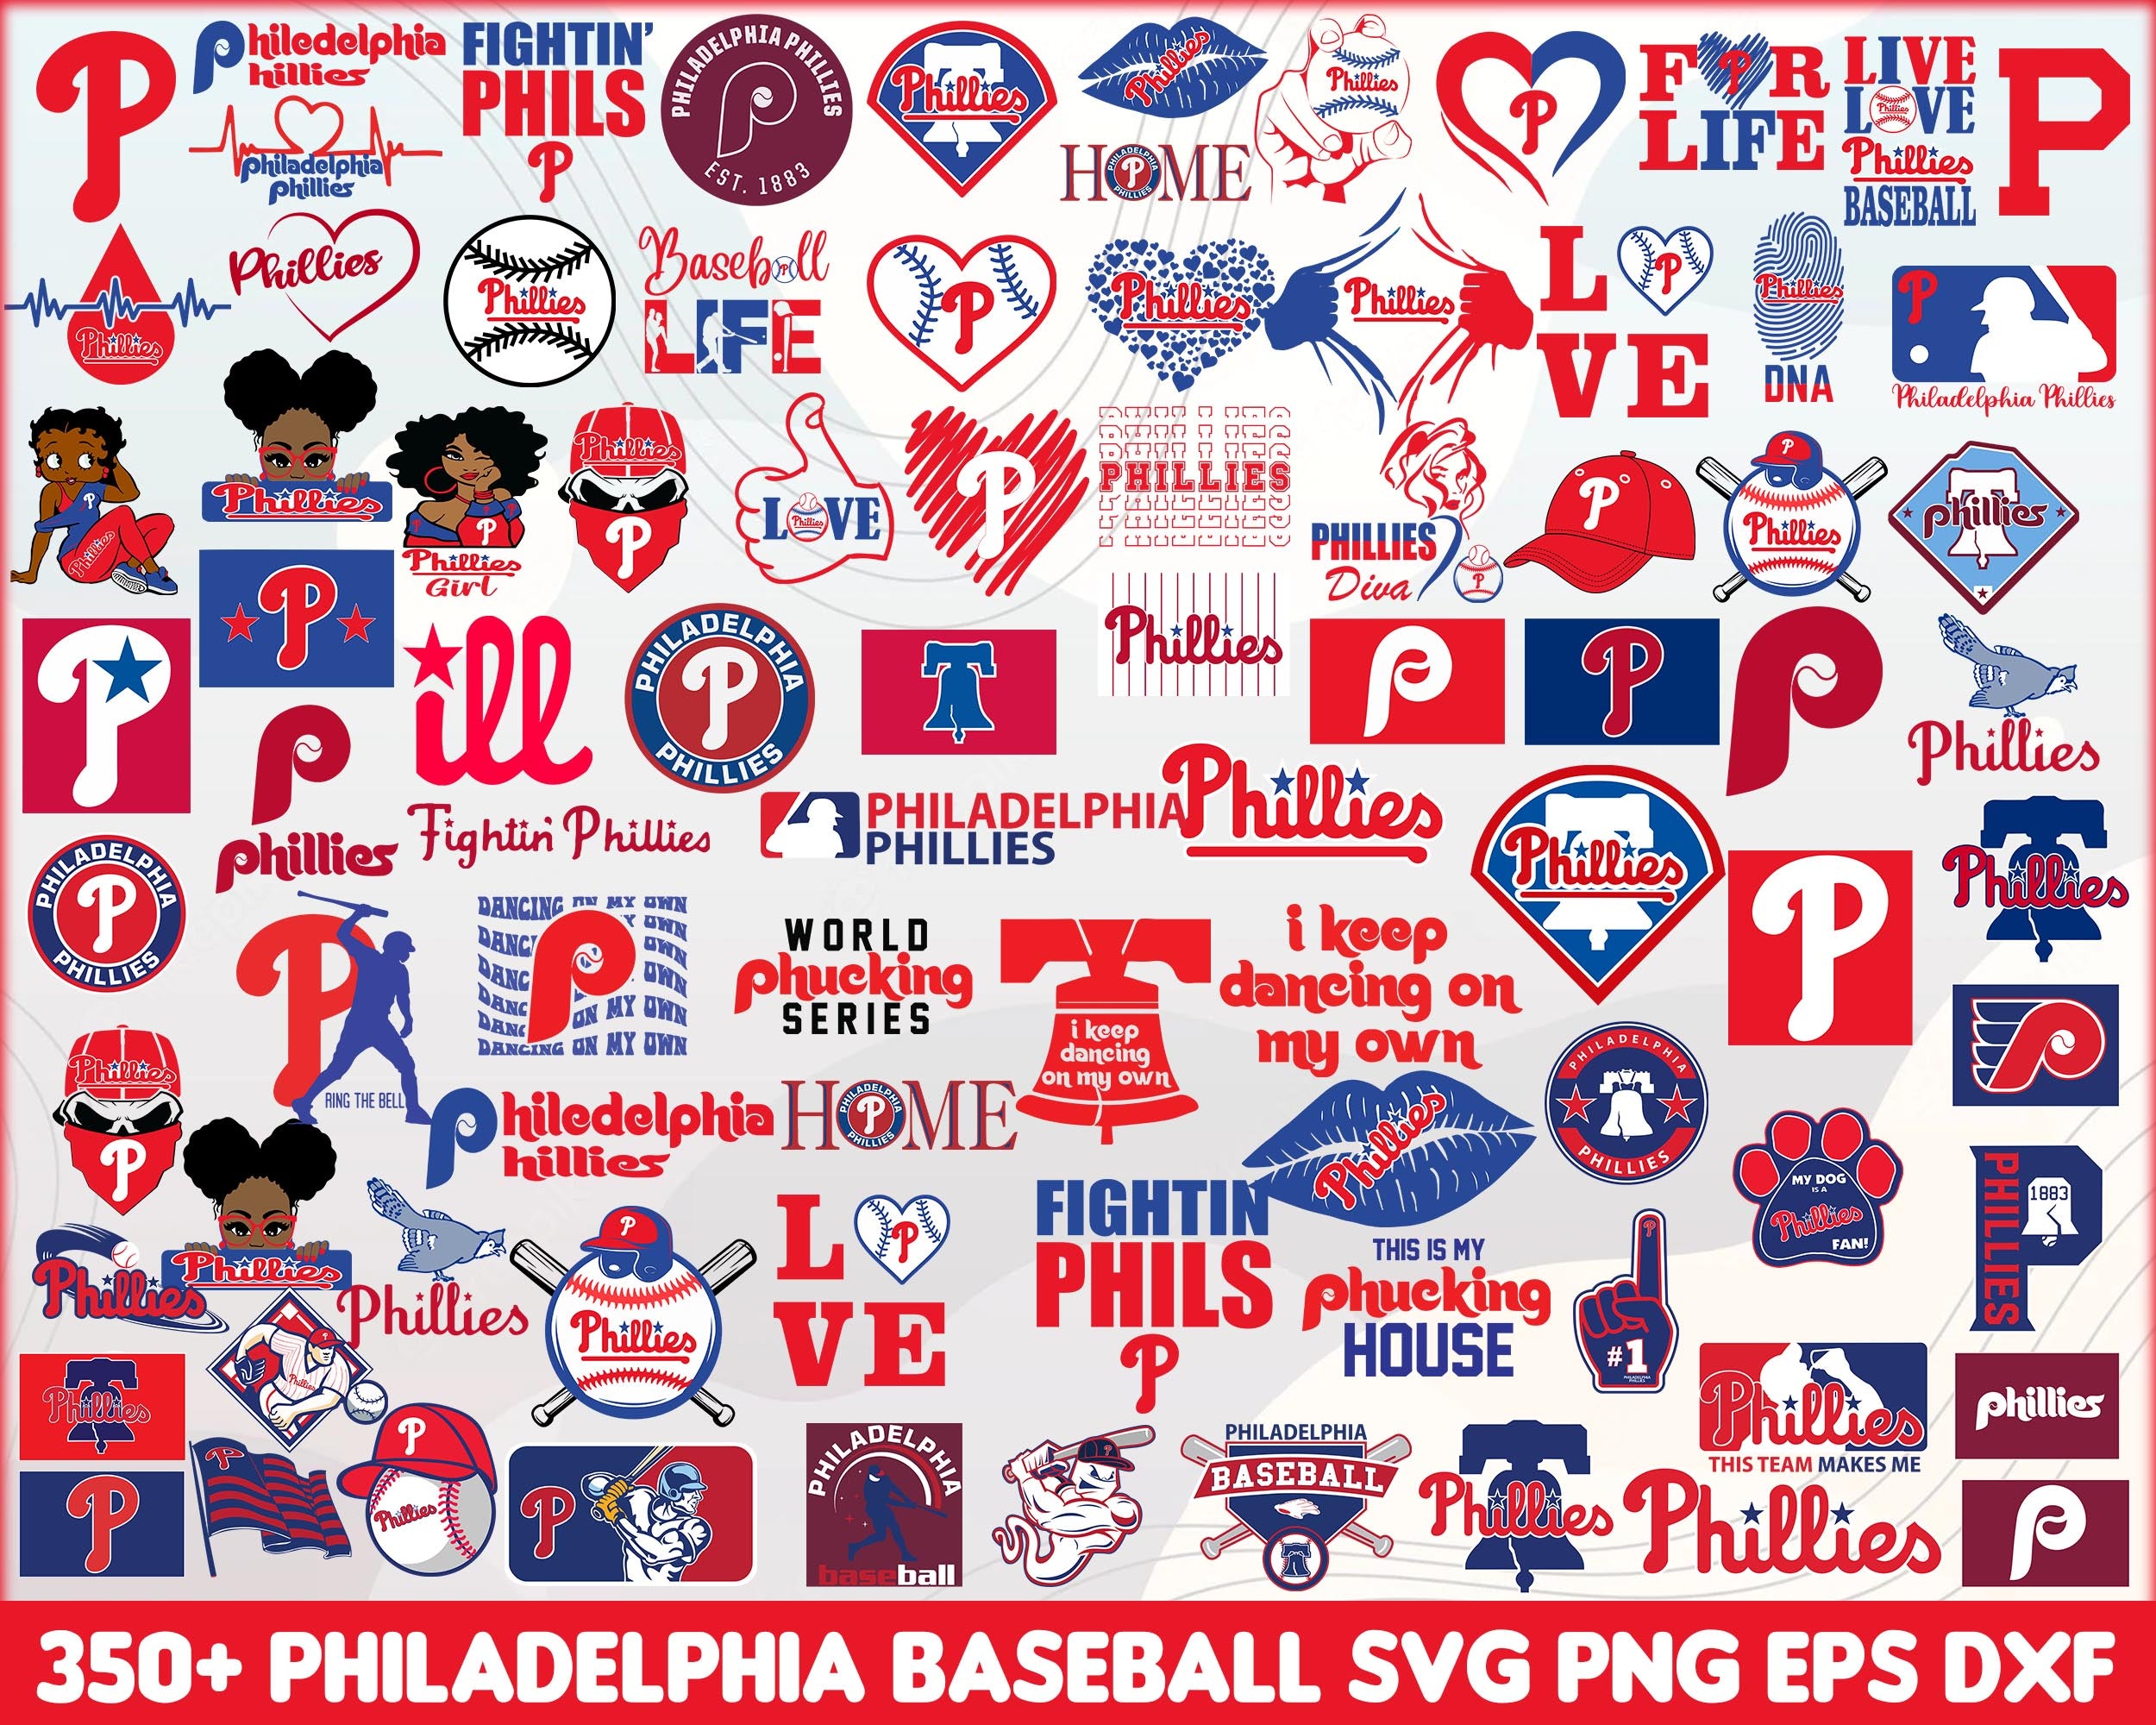 450 Philadelphia Phillies ideas  philadelphia phillies, phillies